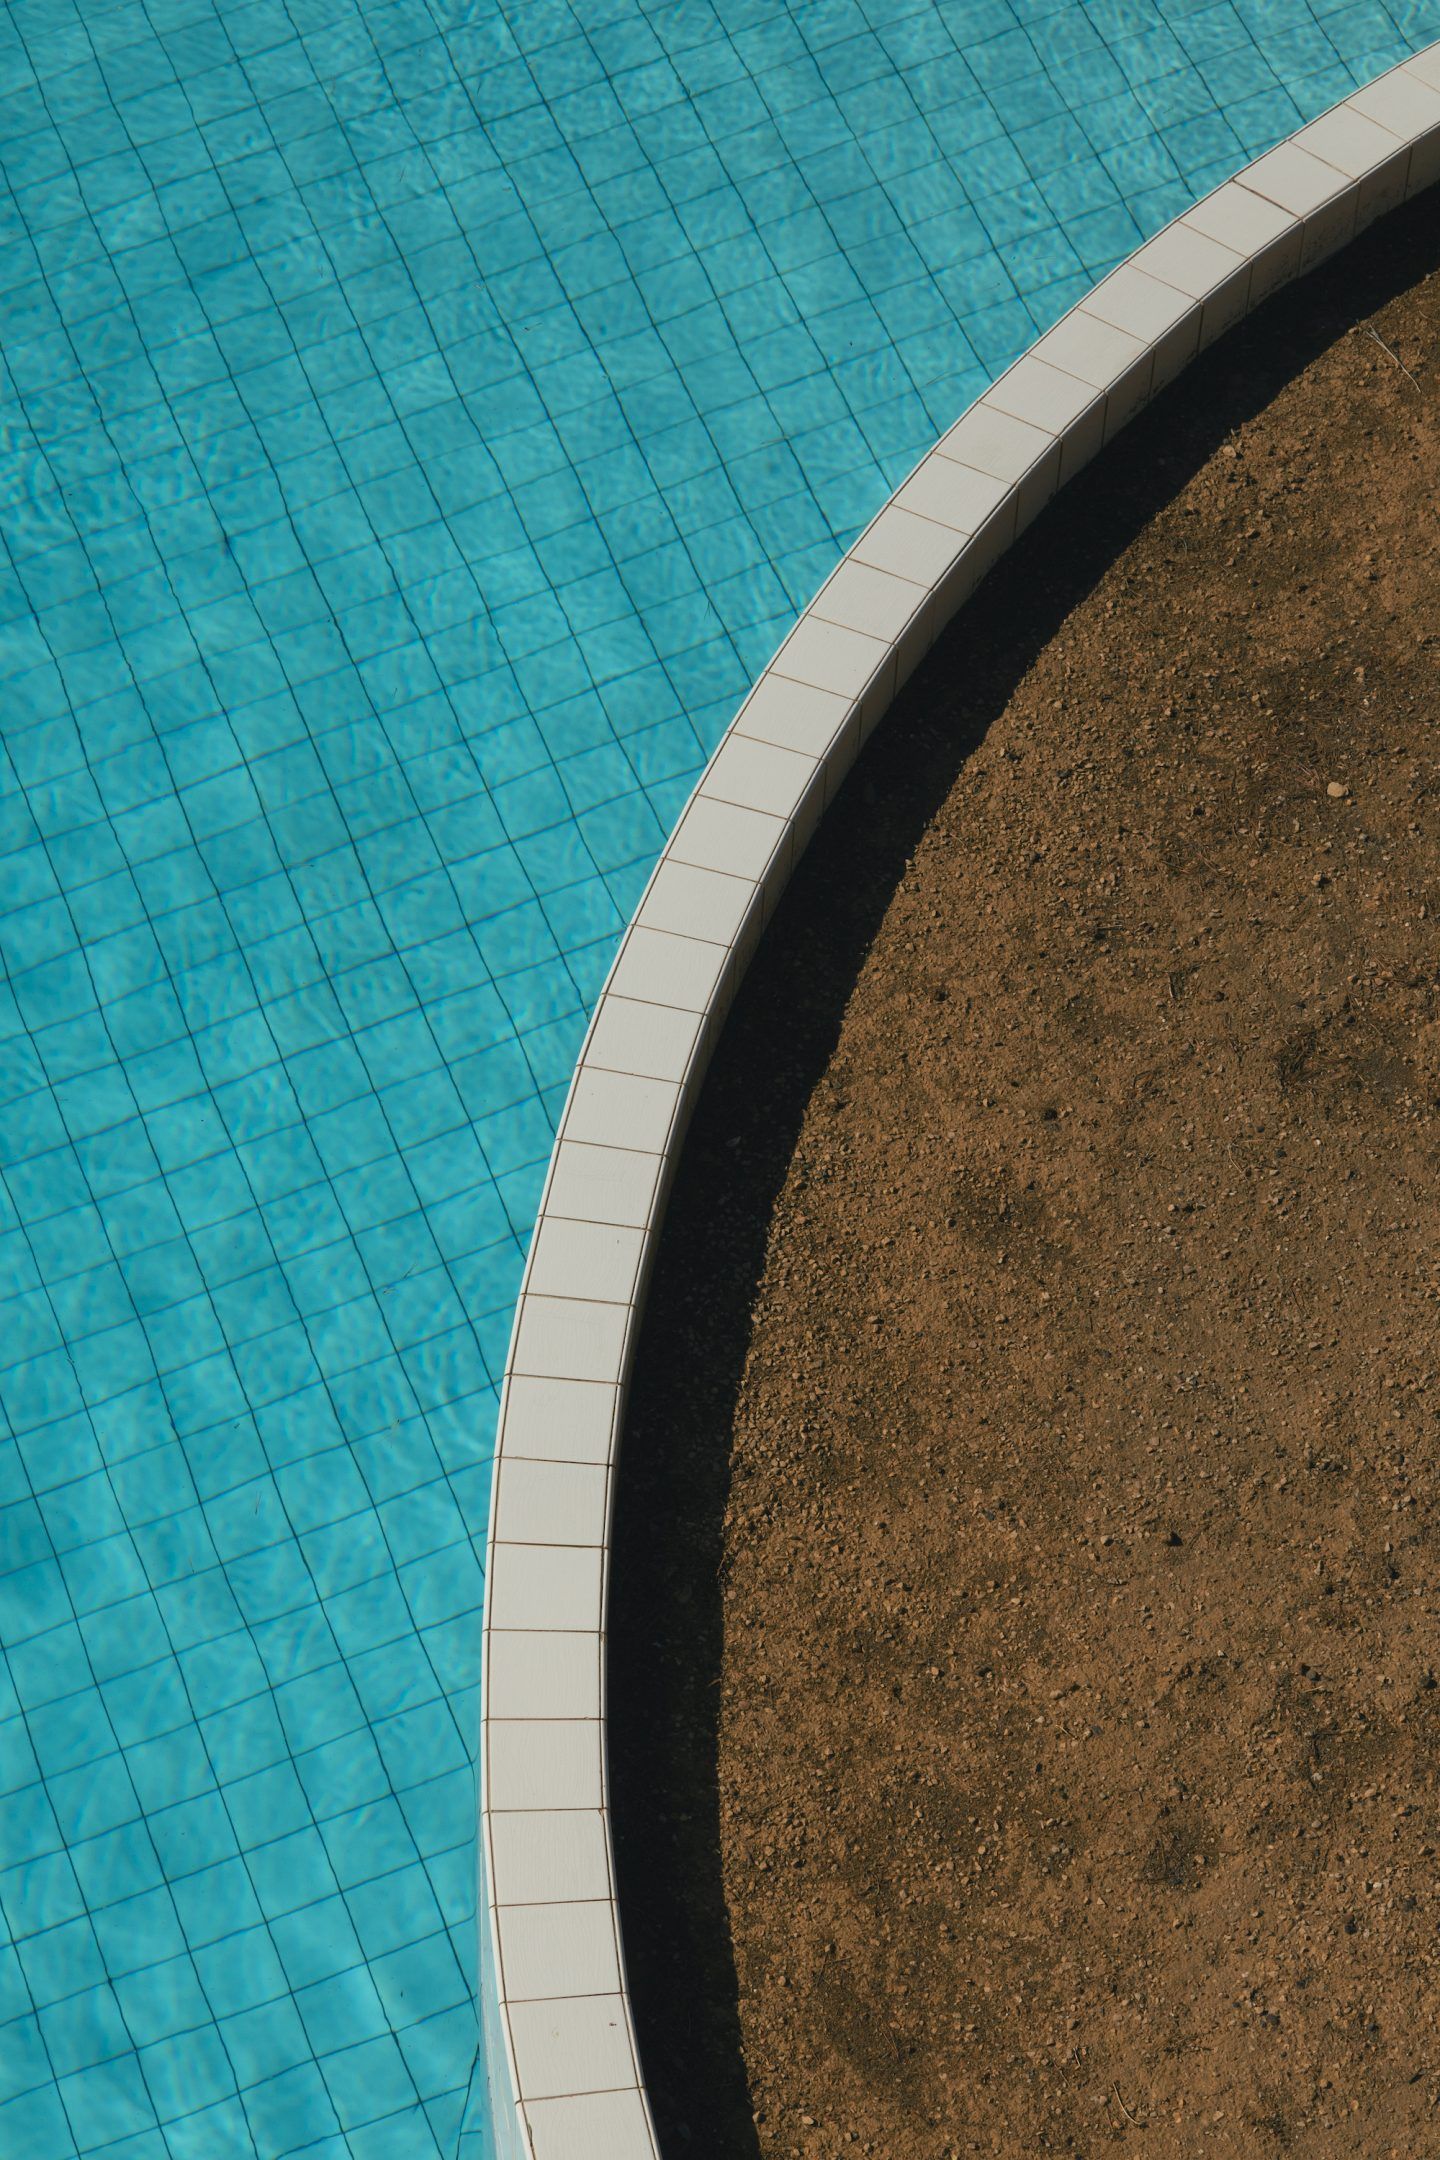 IGNANT-Architecture-Romain-Laprade-Domestic-Pool-007